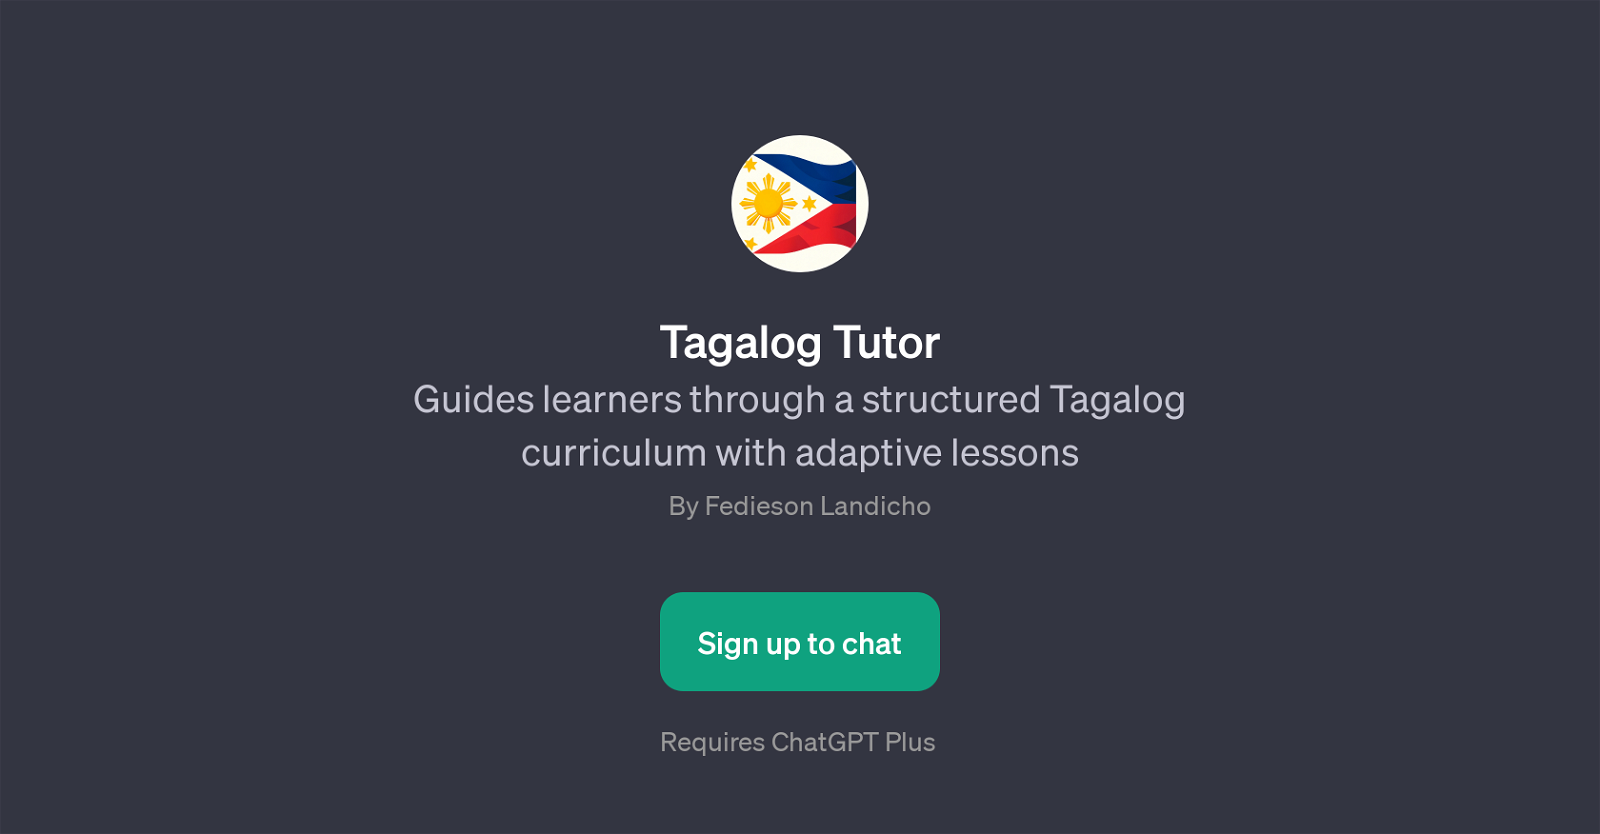 Tagalog Tutor website